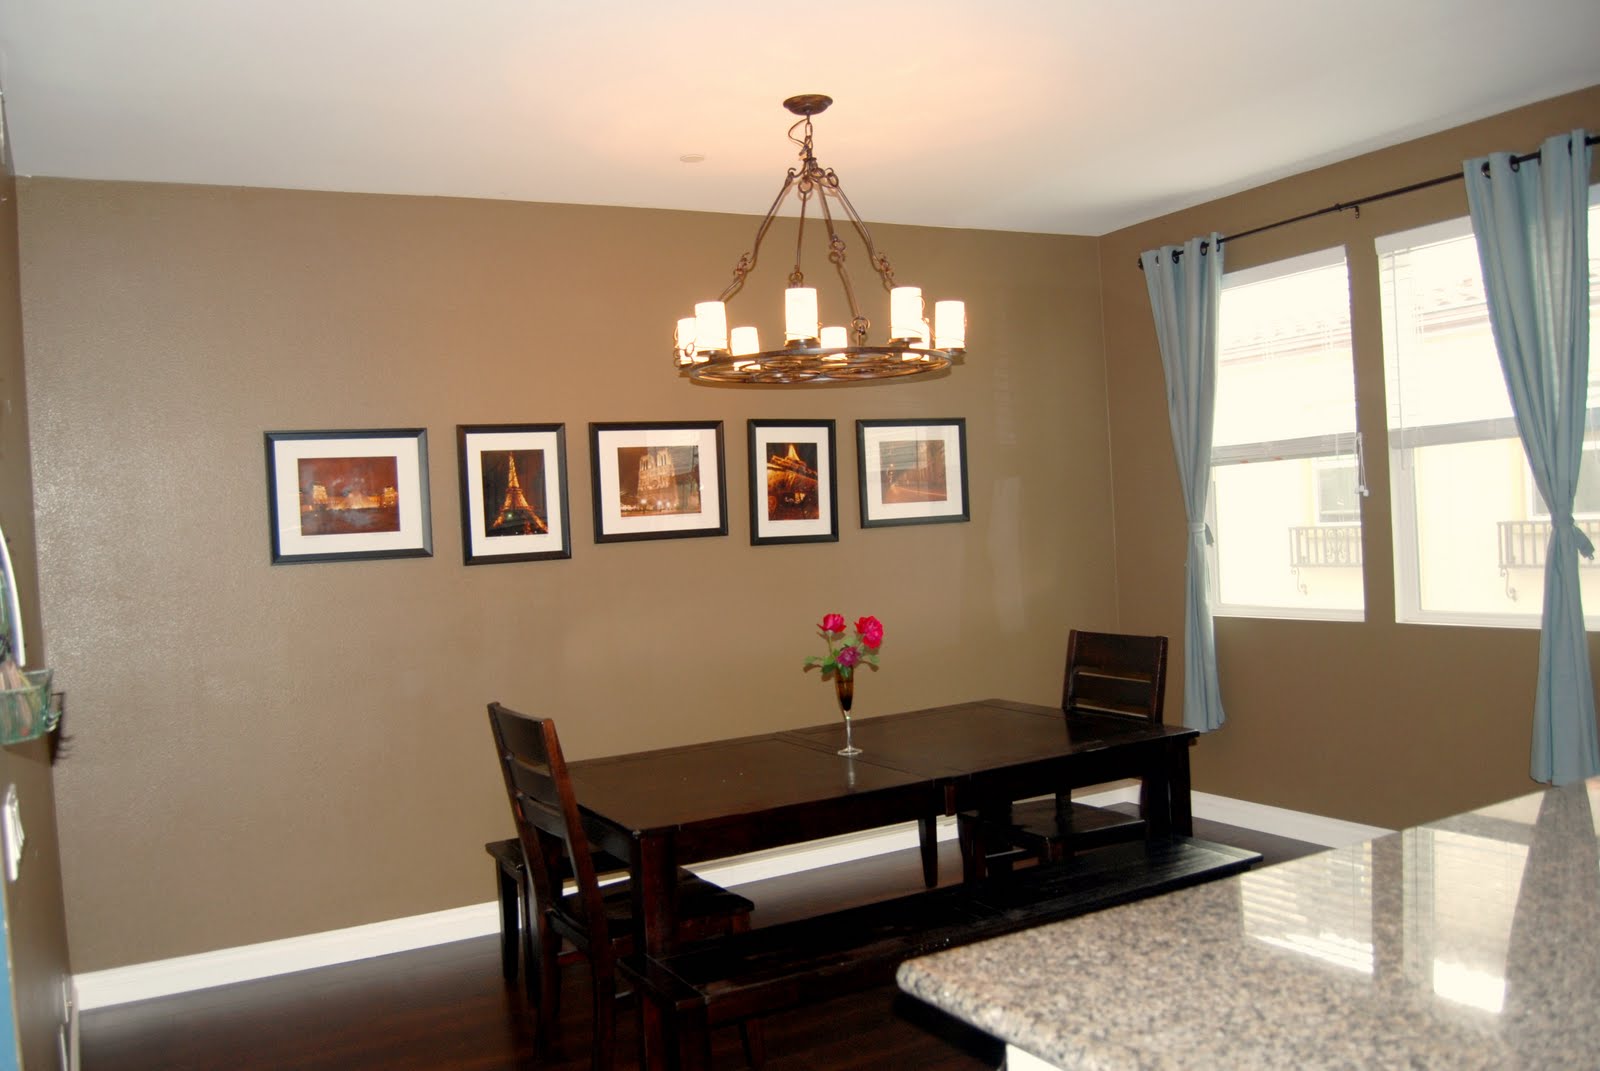 Create Home Houzz Dining Room Wall Decor